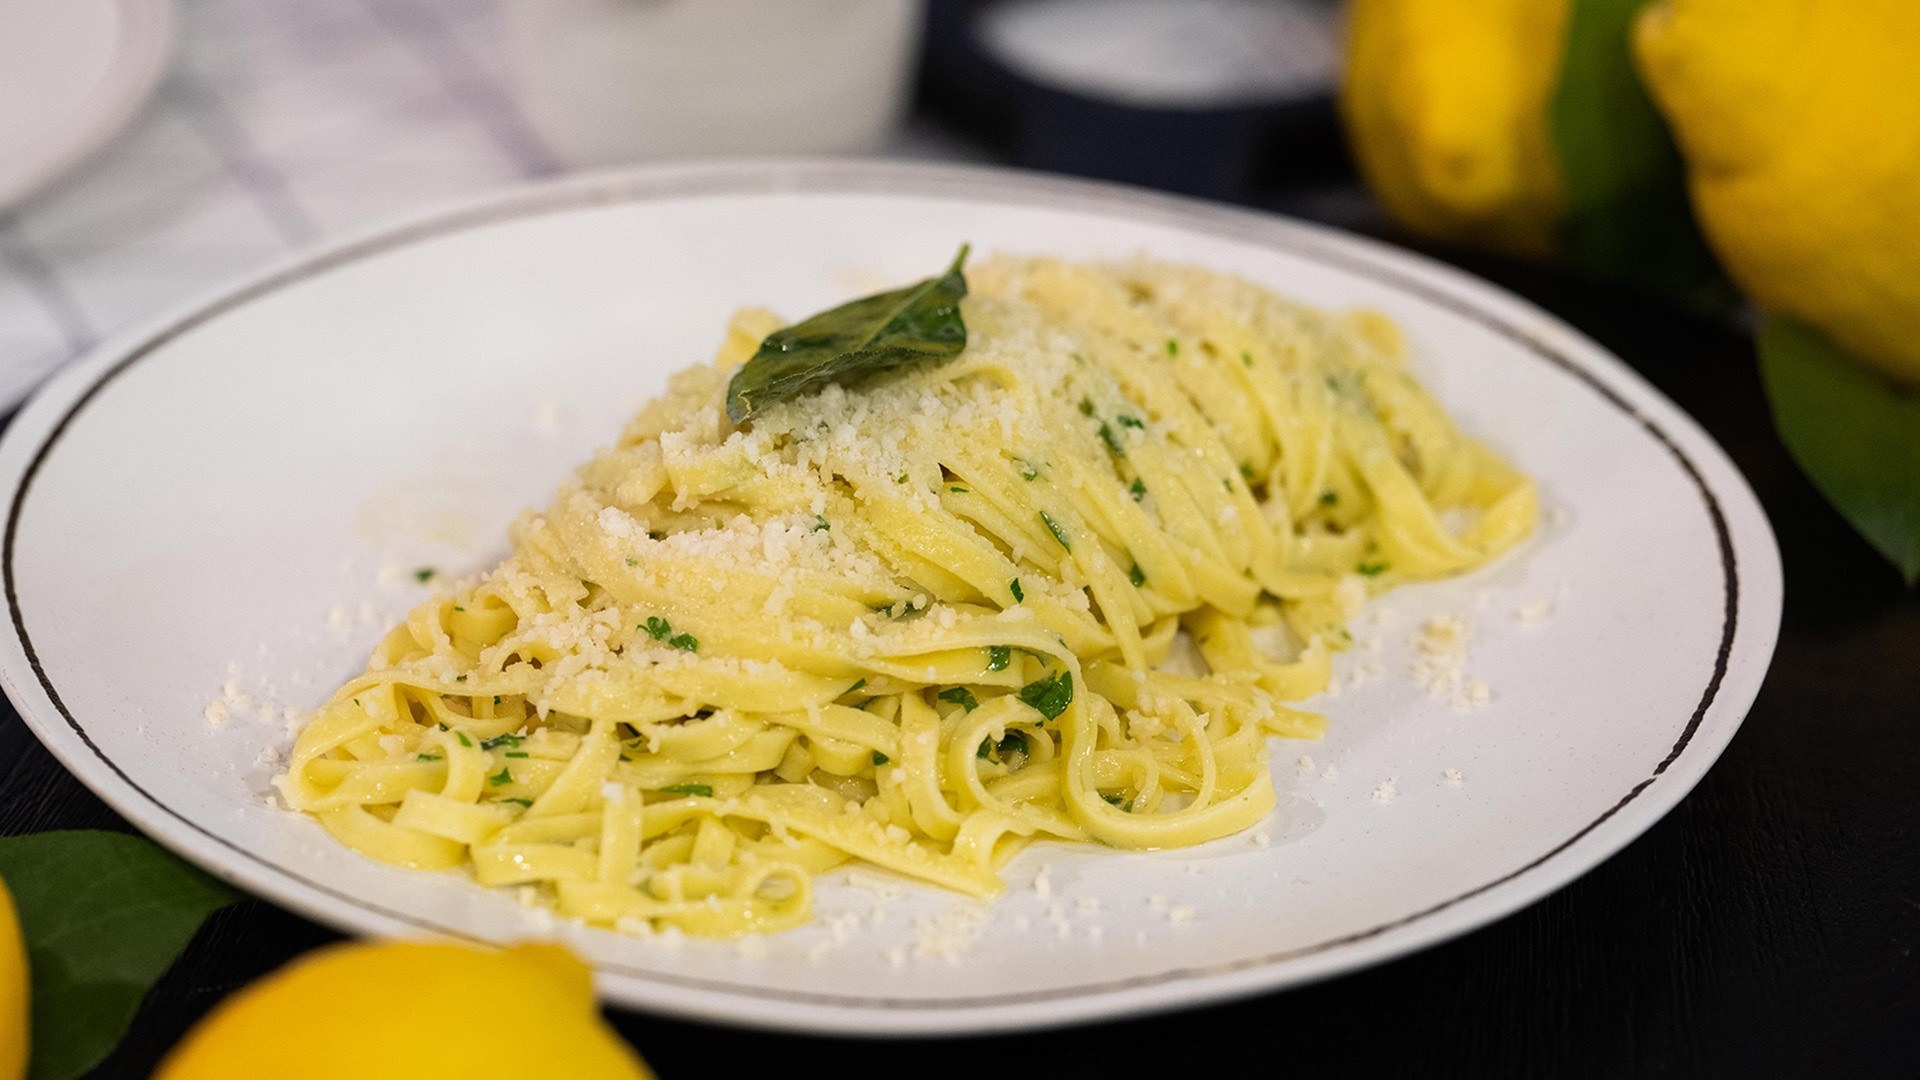 Linguine al limone: Get the easy recipe